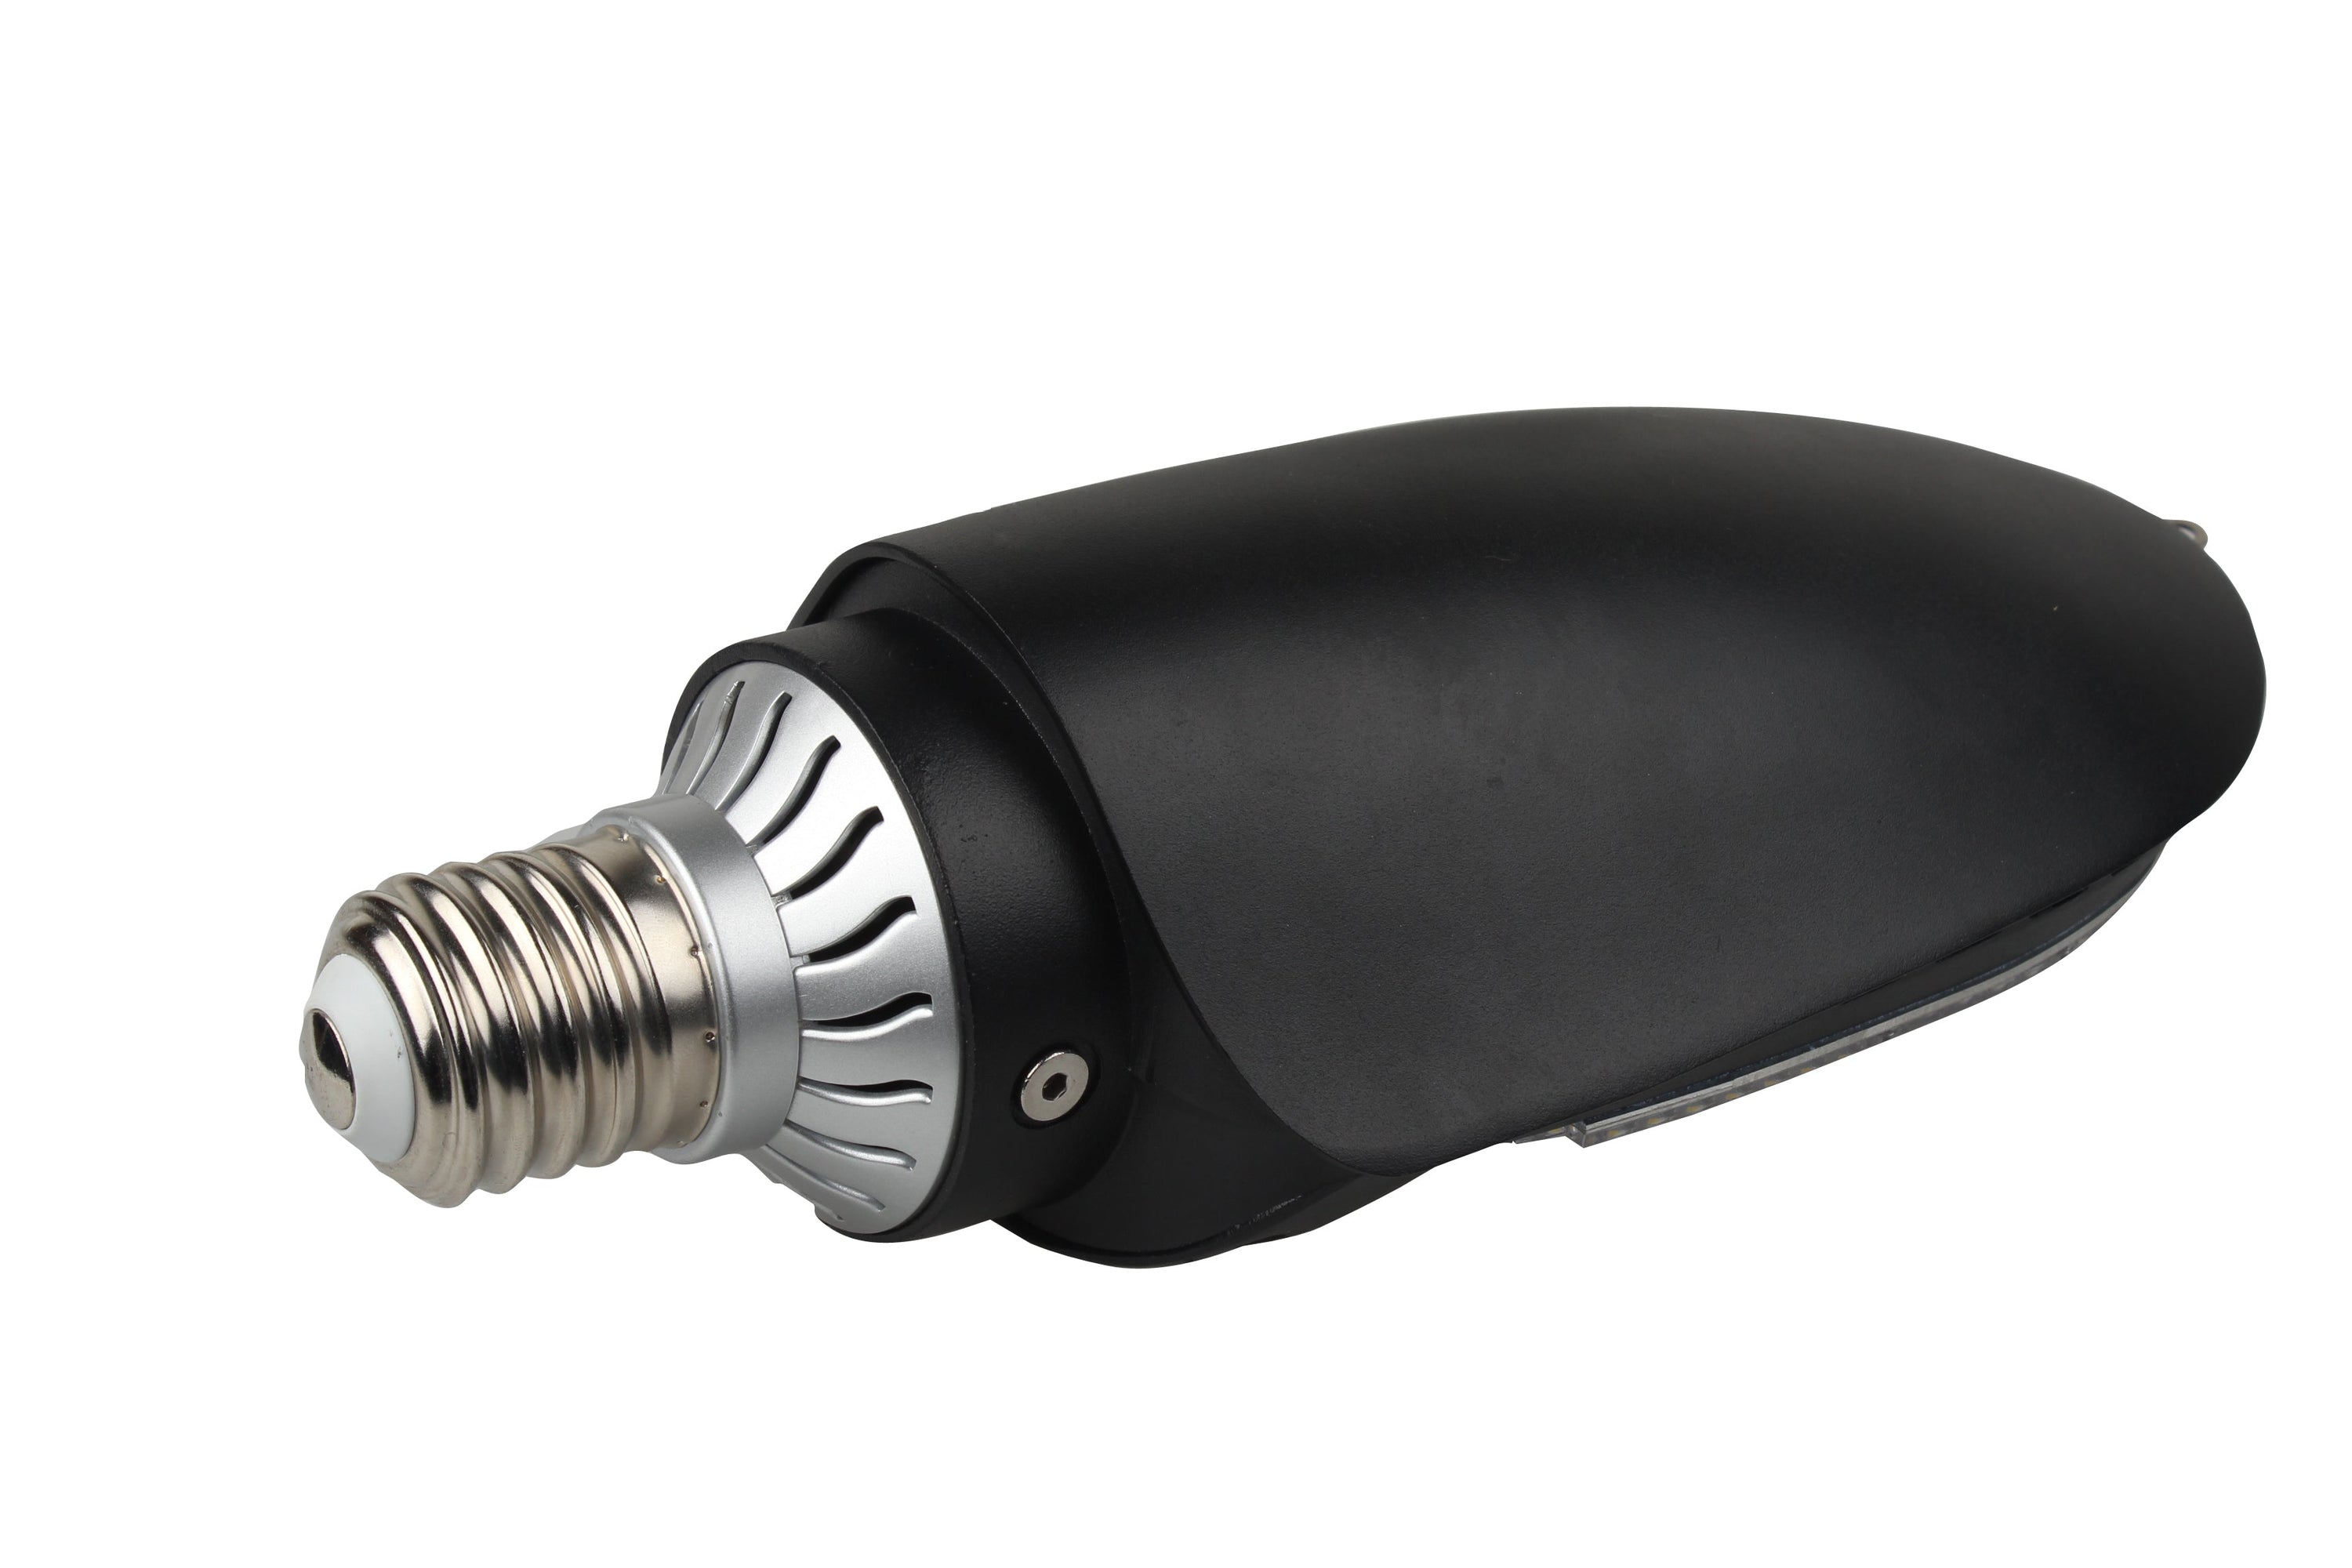 115 Watt LED Paddle Corn Cob Light Bulb - Area Flood Light, Wall Pack Replacement Bulb